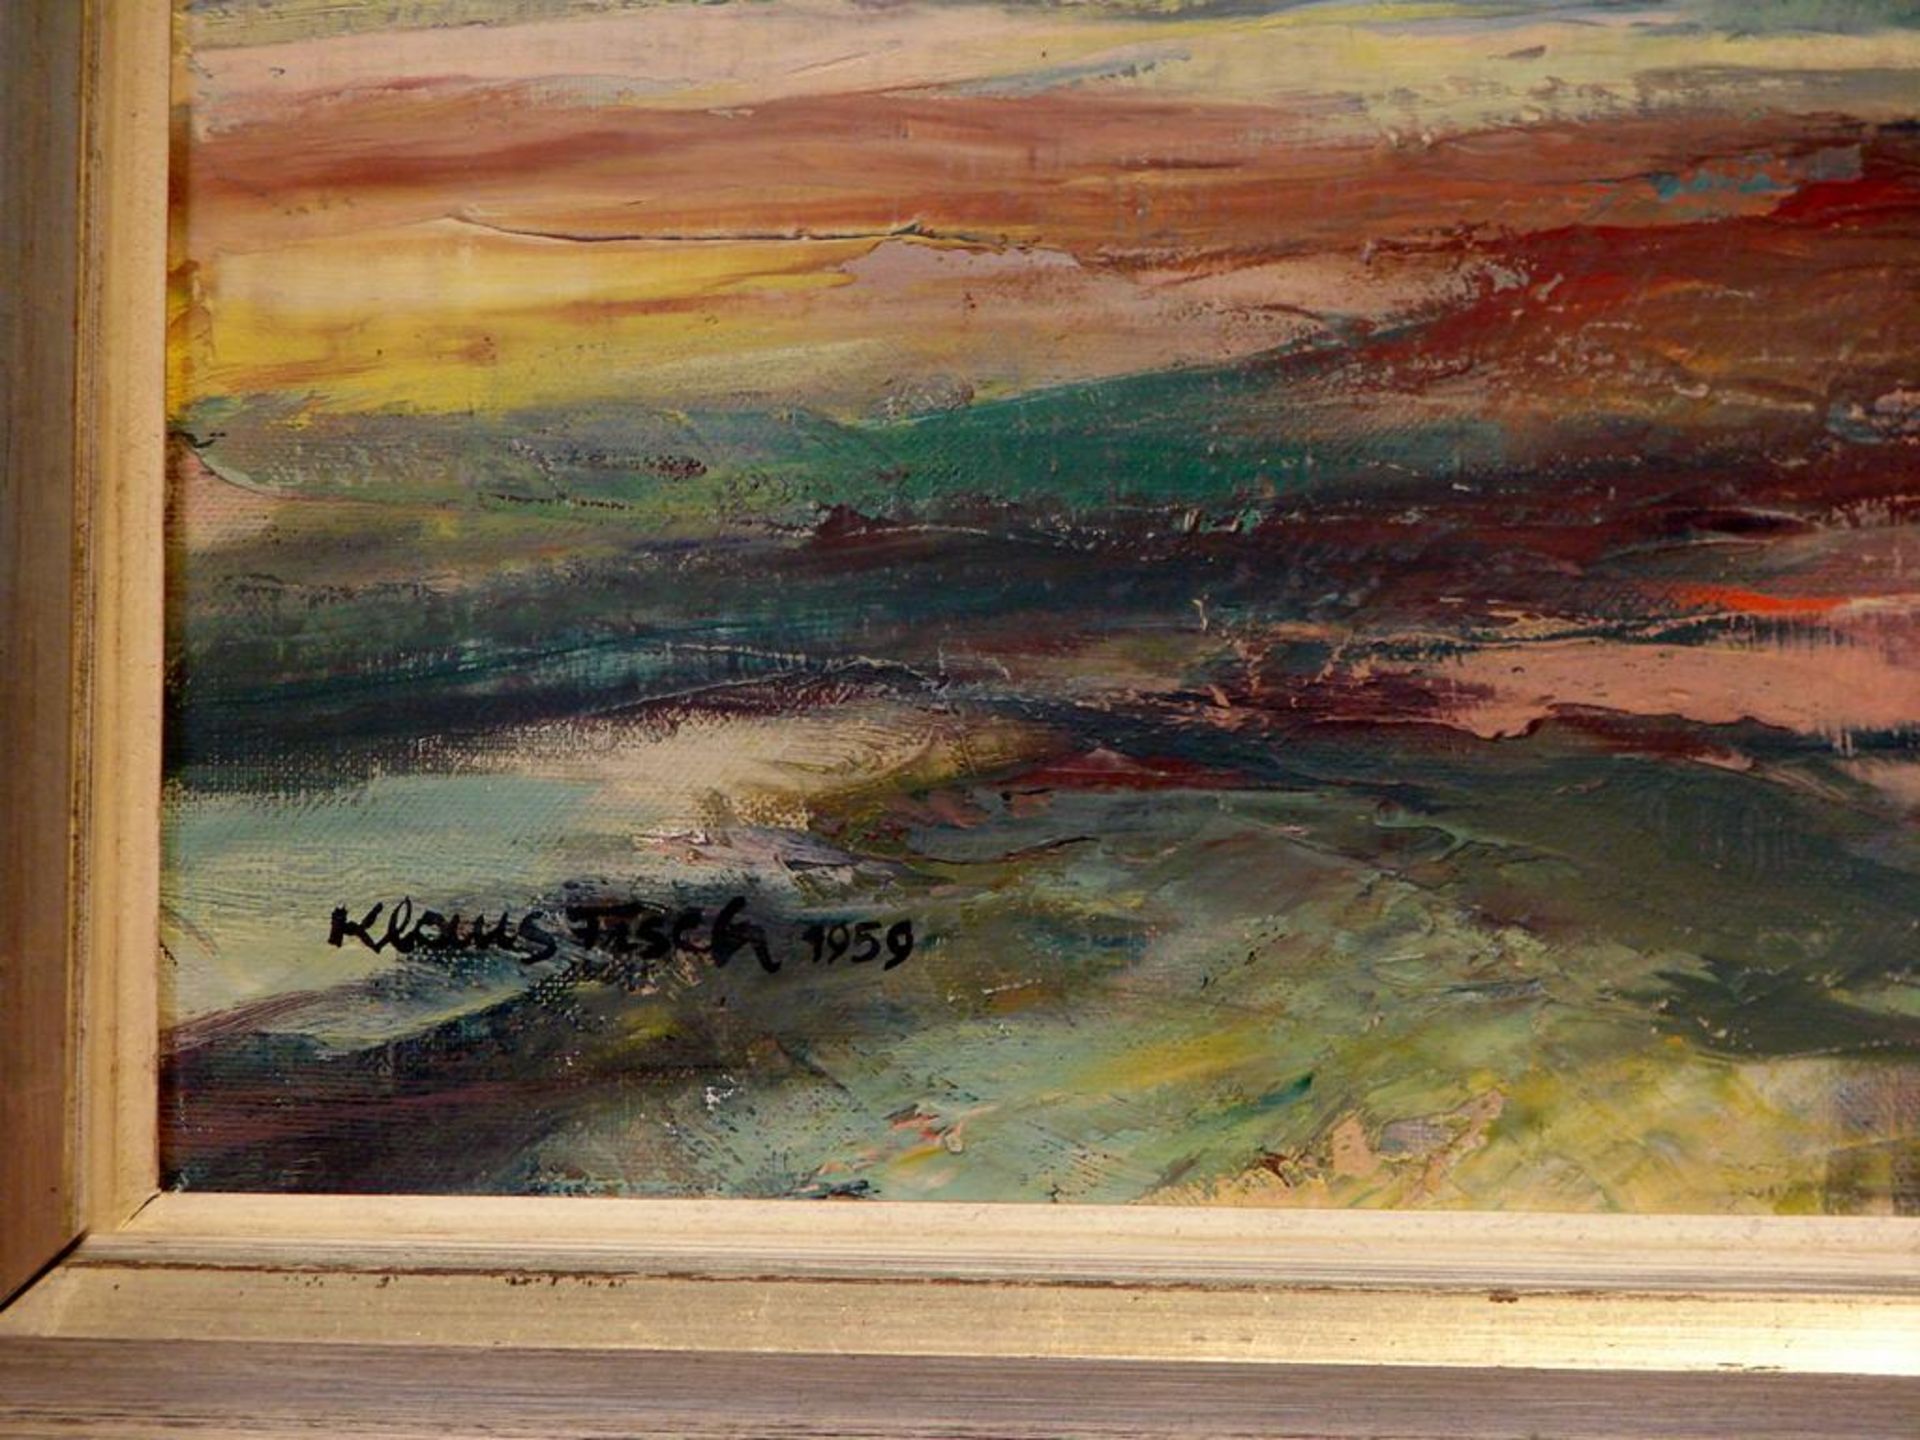 KLAUS FISCH, "Landschaft", ÖL/L, u.li.sig., dat. 1959, ca. 60 x 77 cm- - -22.00 % buyer's premium on - Image 2 of 2